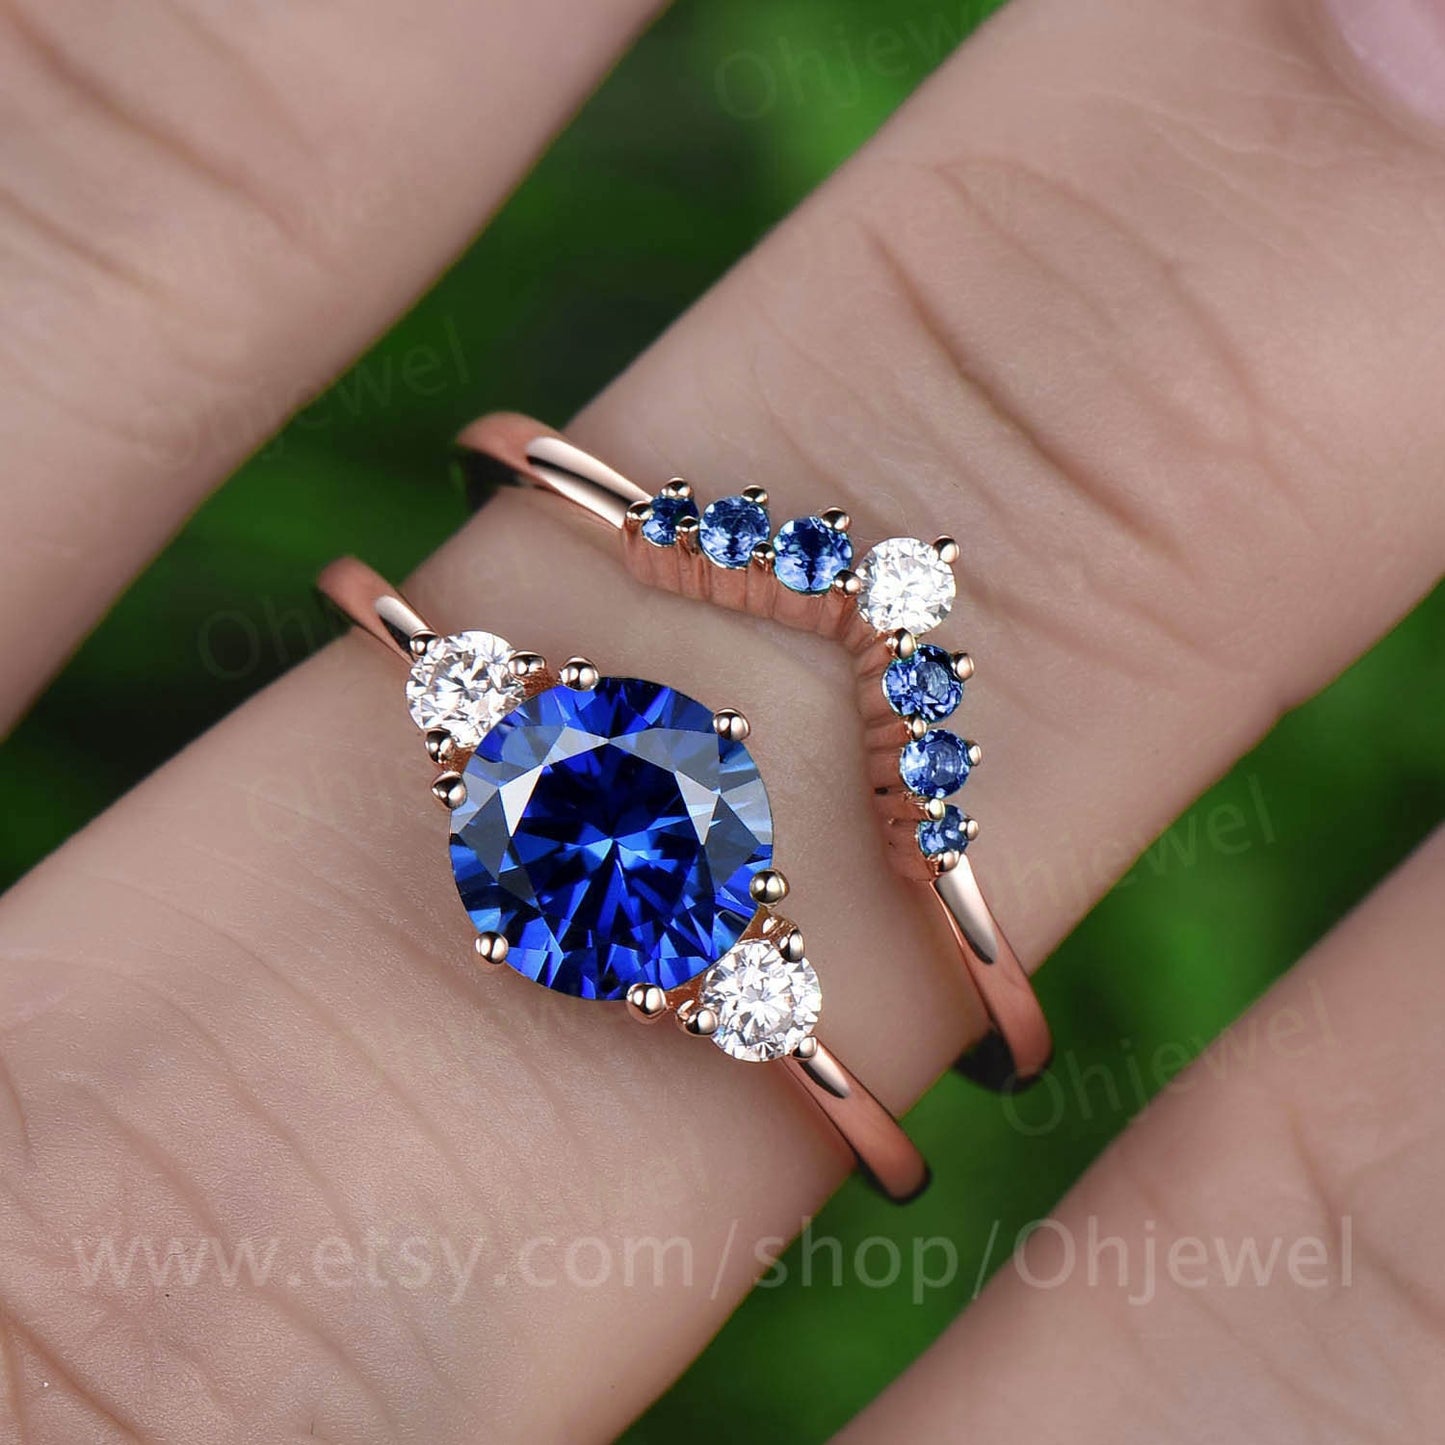 Huiskamer buitenaards wezen redden Vintage unique blue sapphire engagement ring set 14k rose gold three s –  Ohjewel